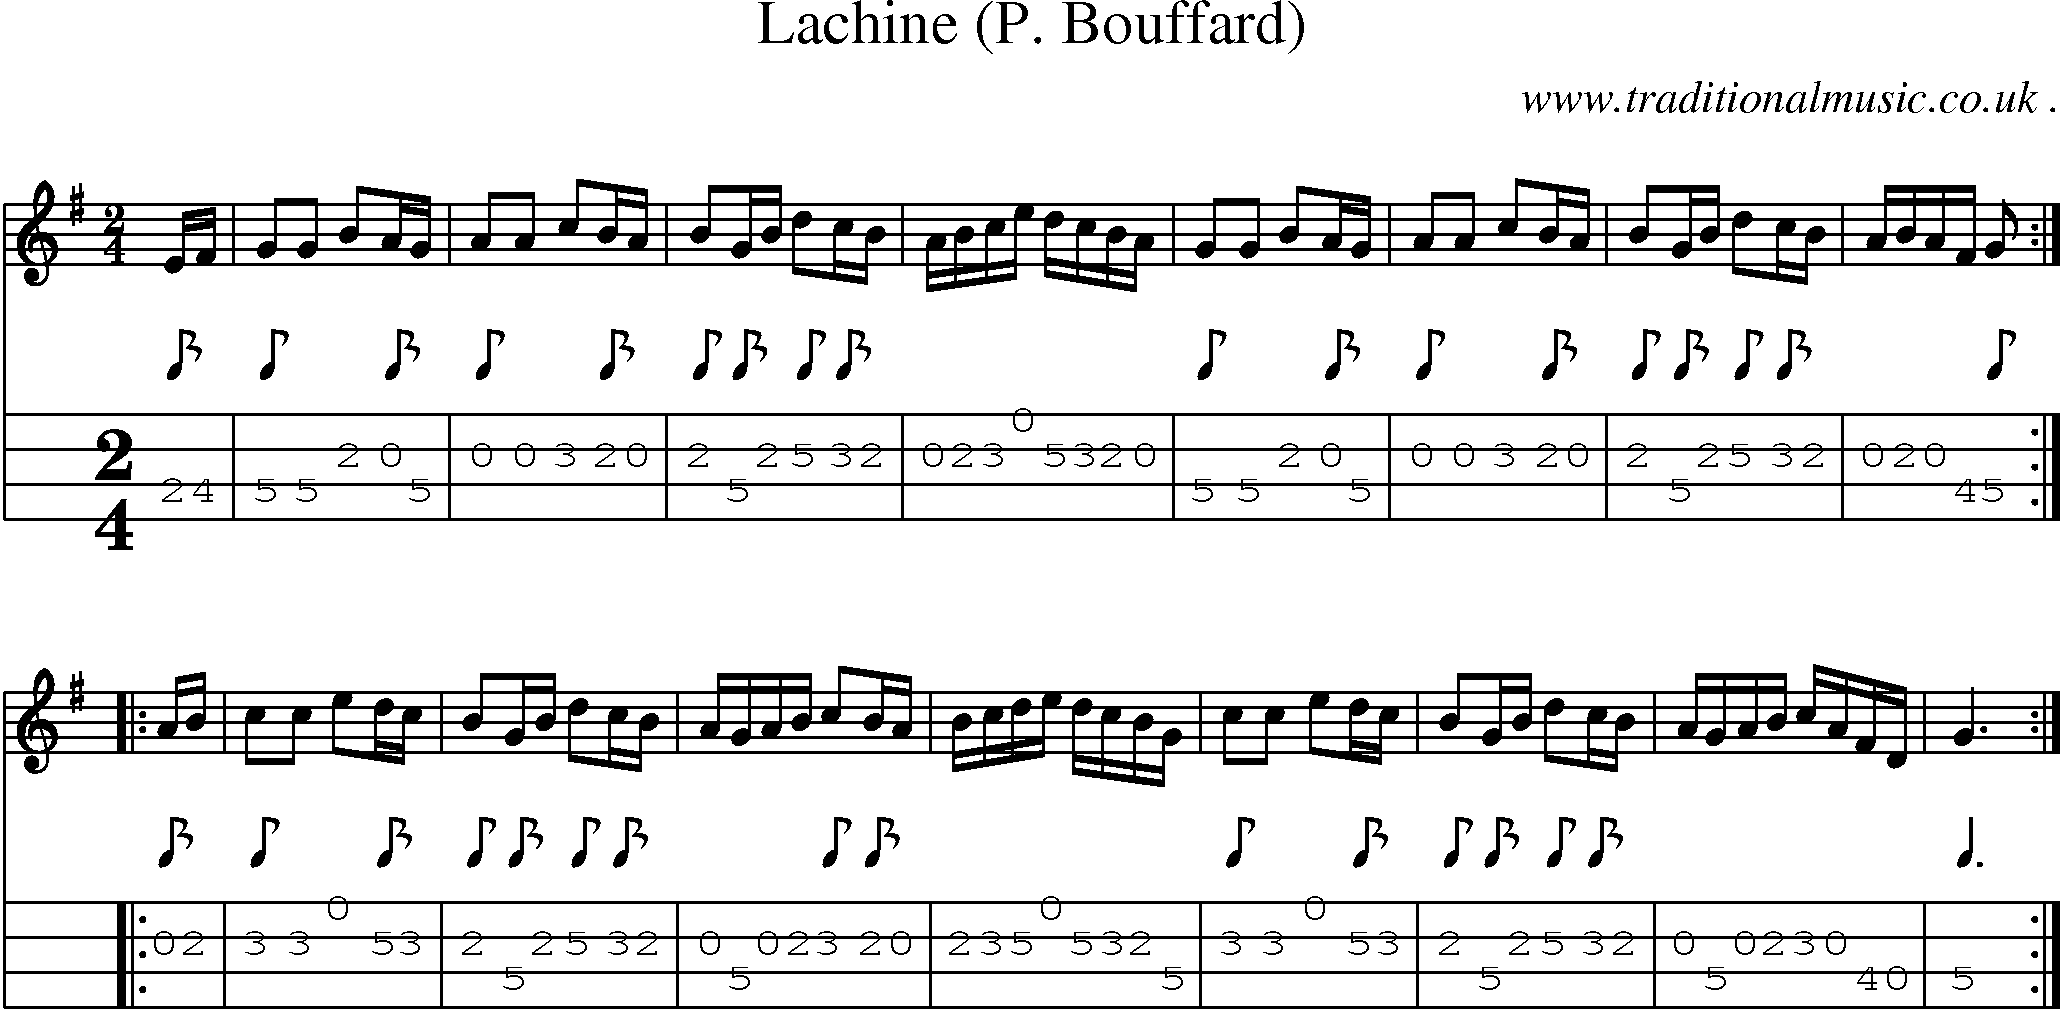 Sheet-Music and Mandolin Tabs for Lachine (p Bouffard)